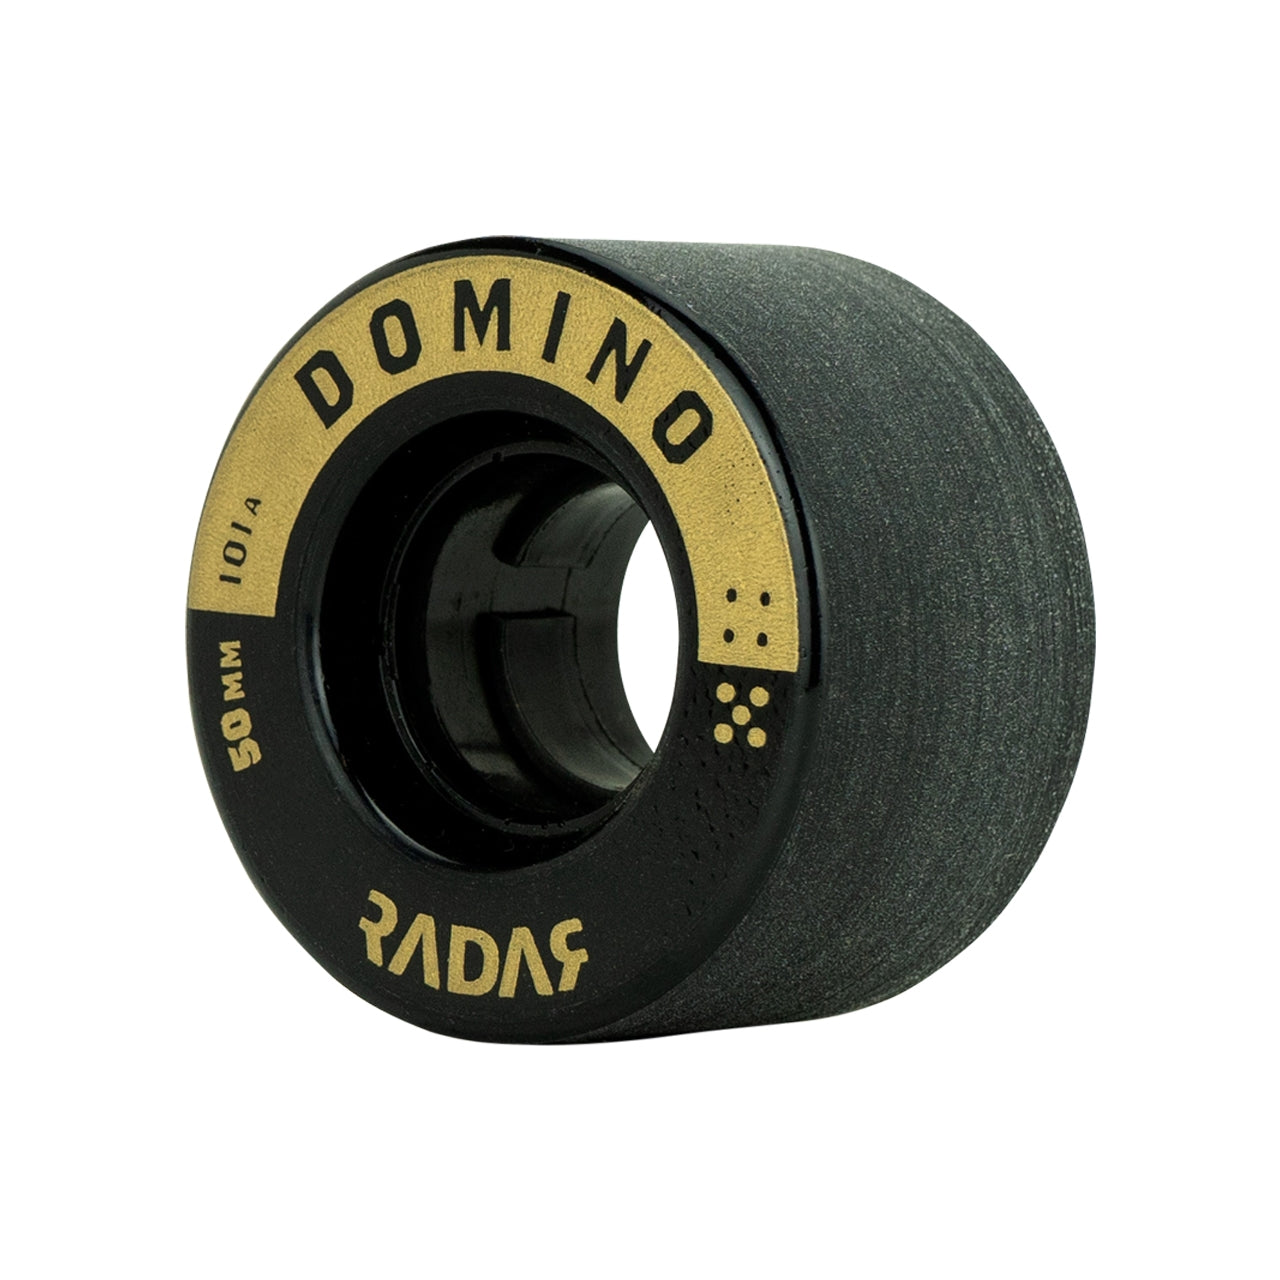 Ruedas Radar Domino Negras/Oro 50mm 101a - Juego de 4